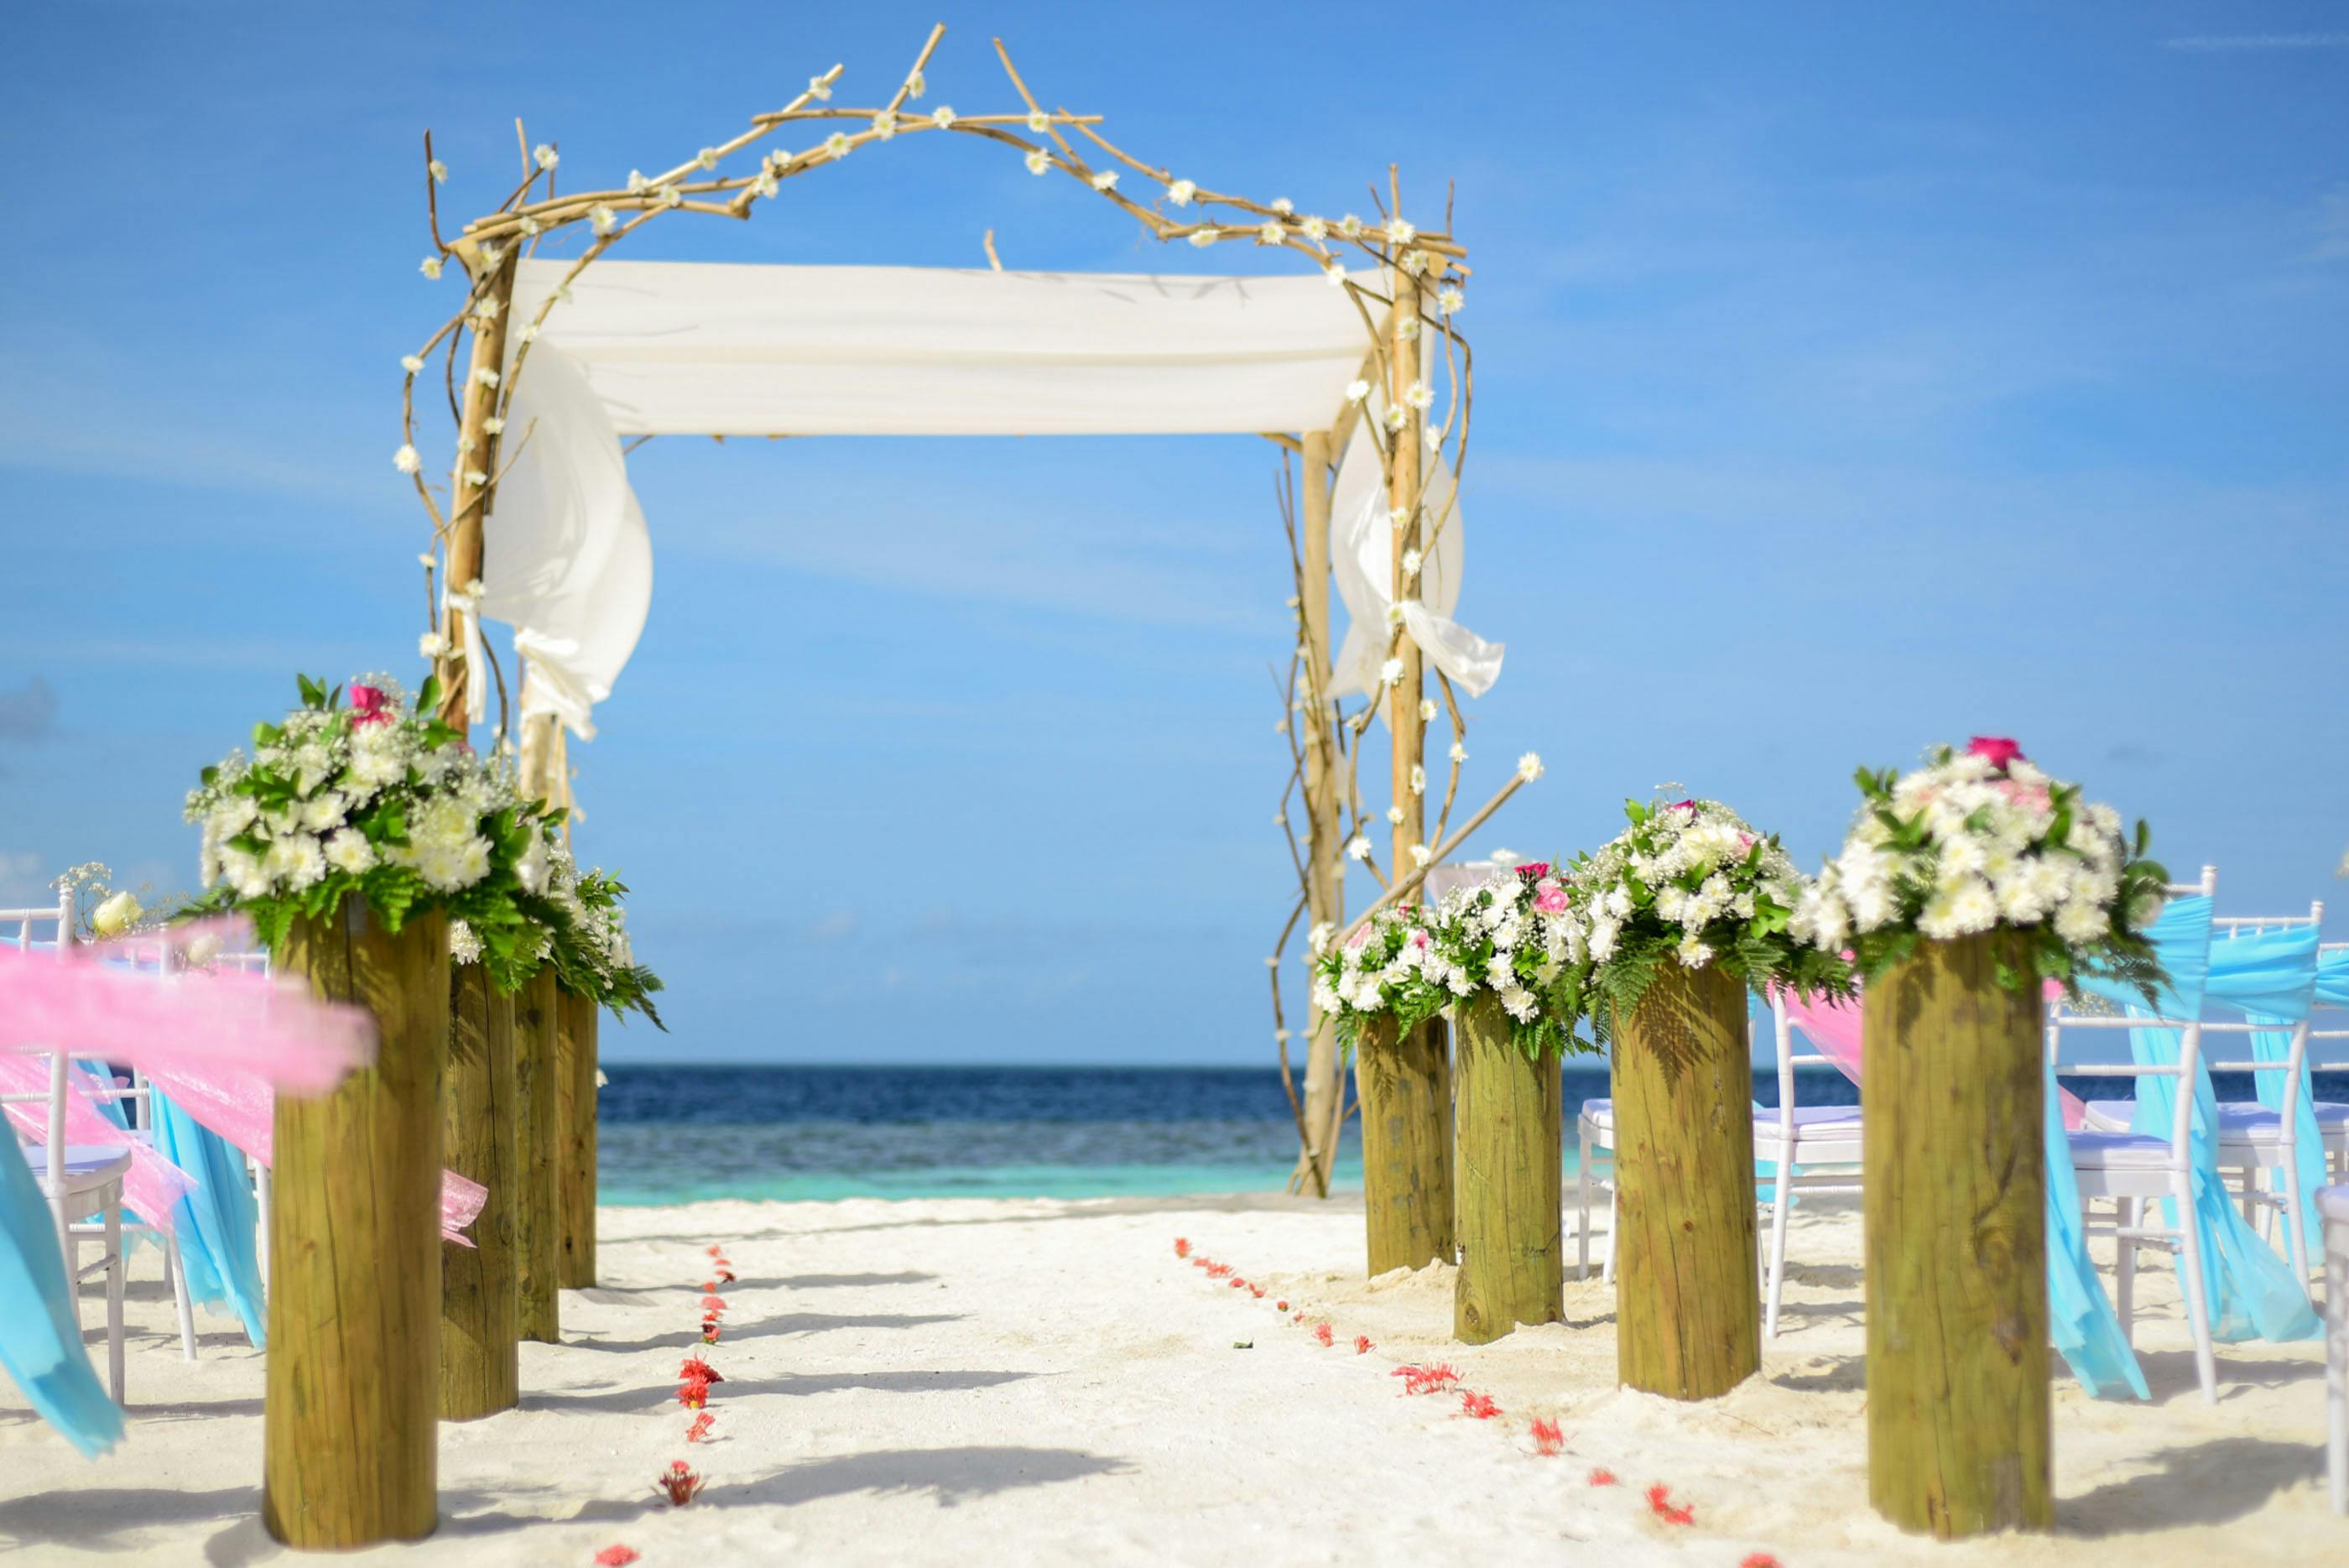 Wedding Background Pictures  Download Free Images on Unsplash